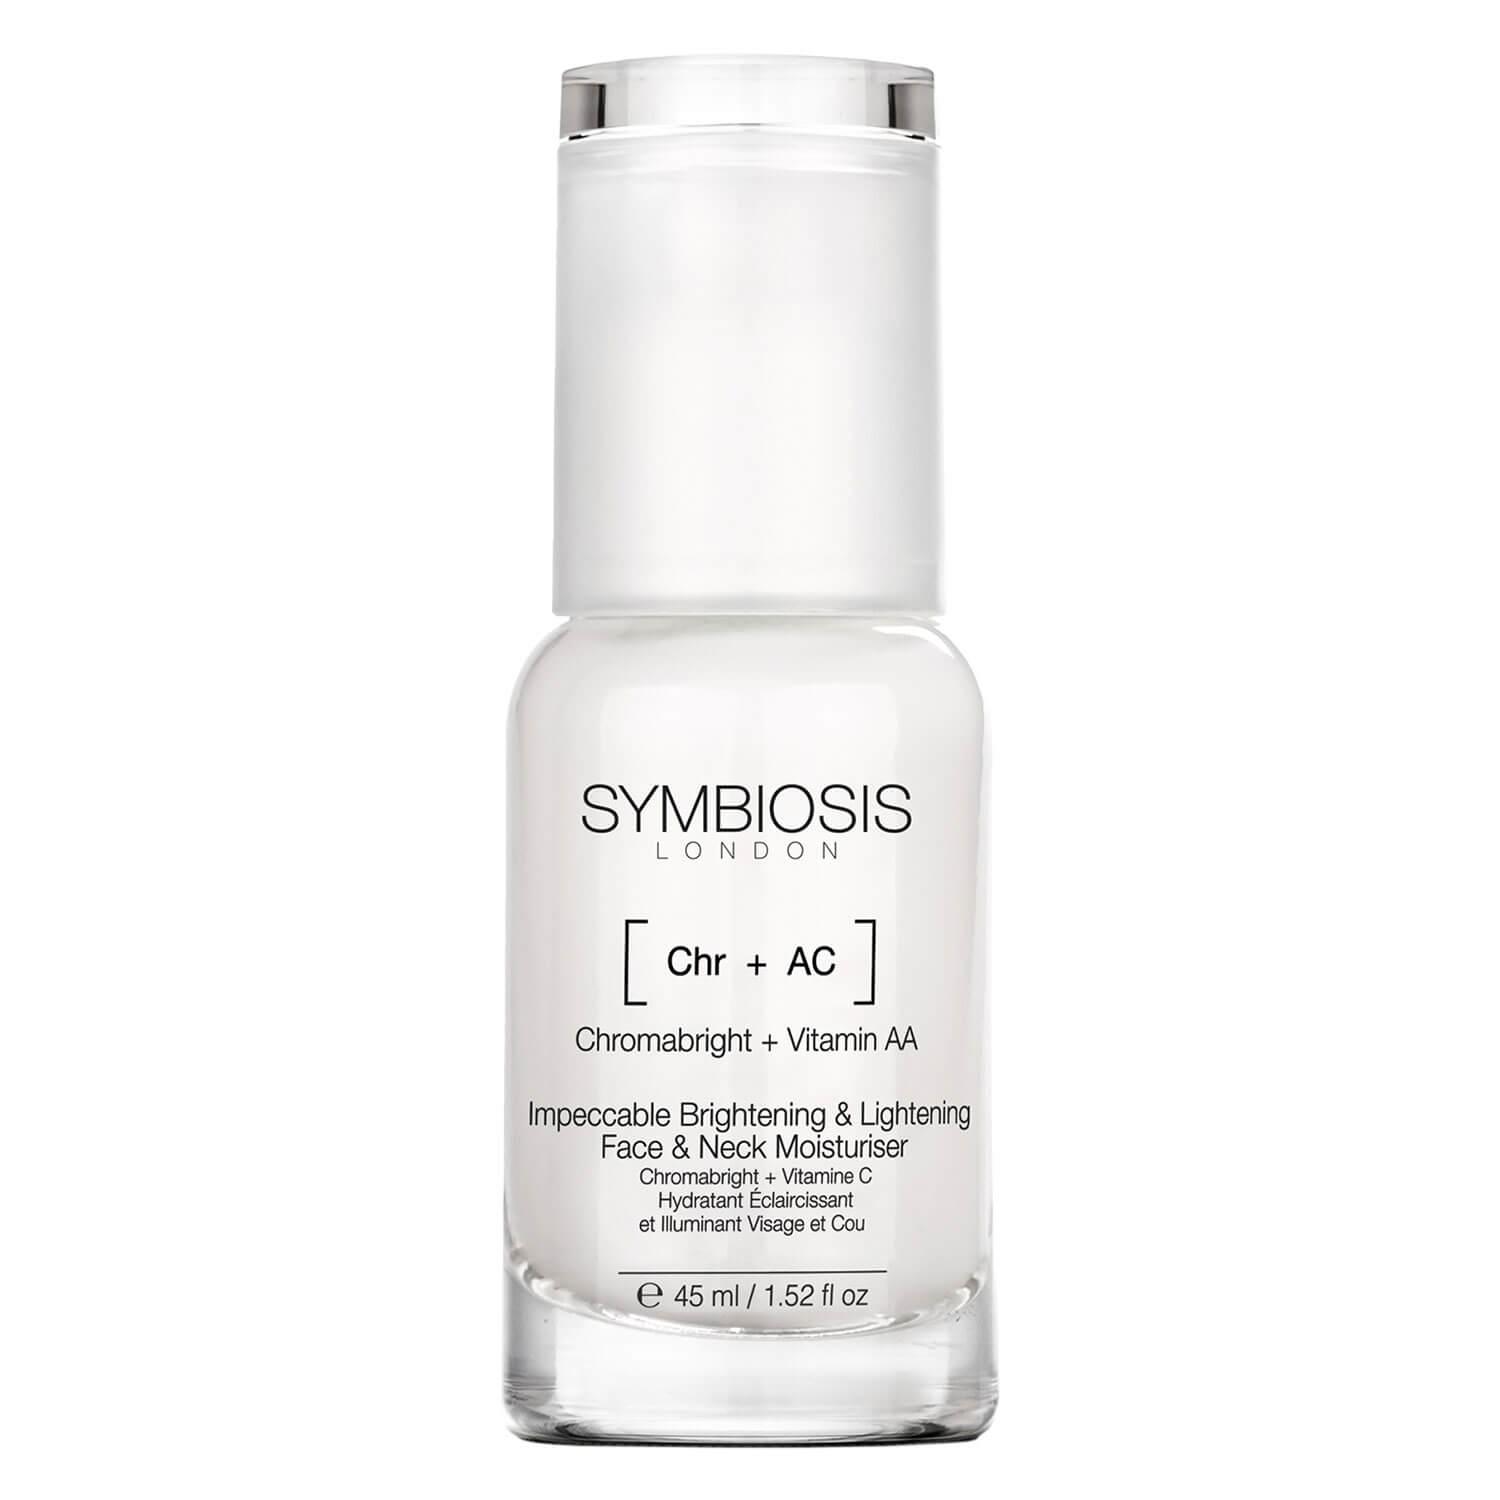 Symbiosis - [Chromabright + Vitamin C] Impeccable Brightening & Lightening Face & Neck Moisturiser